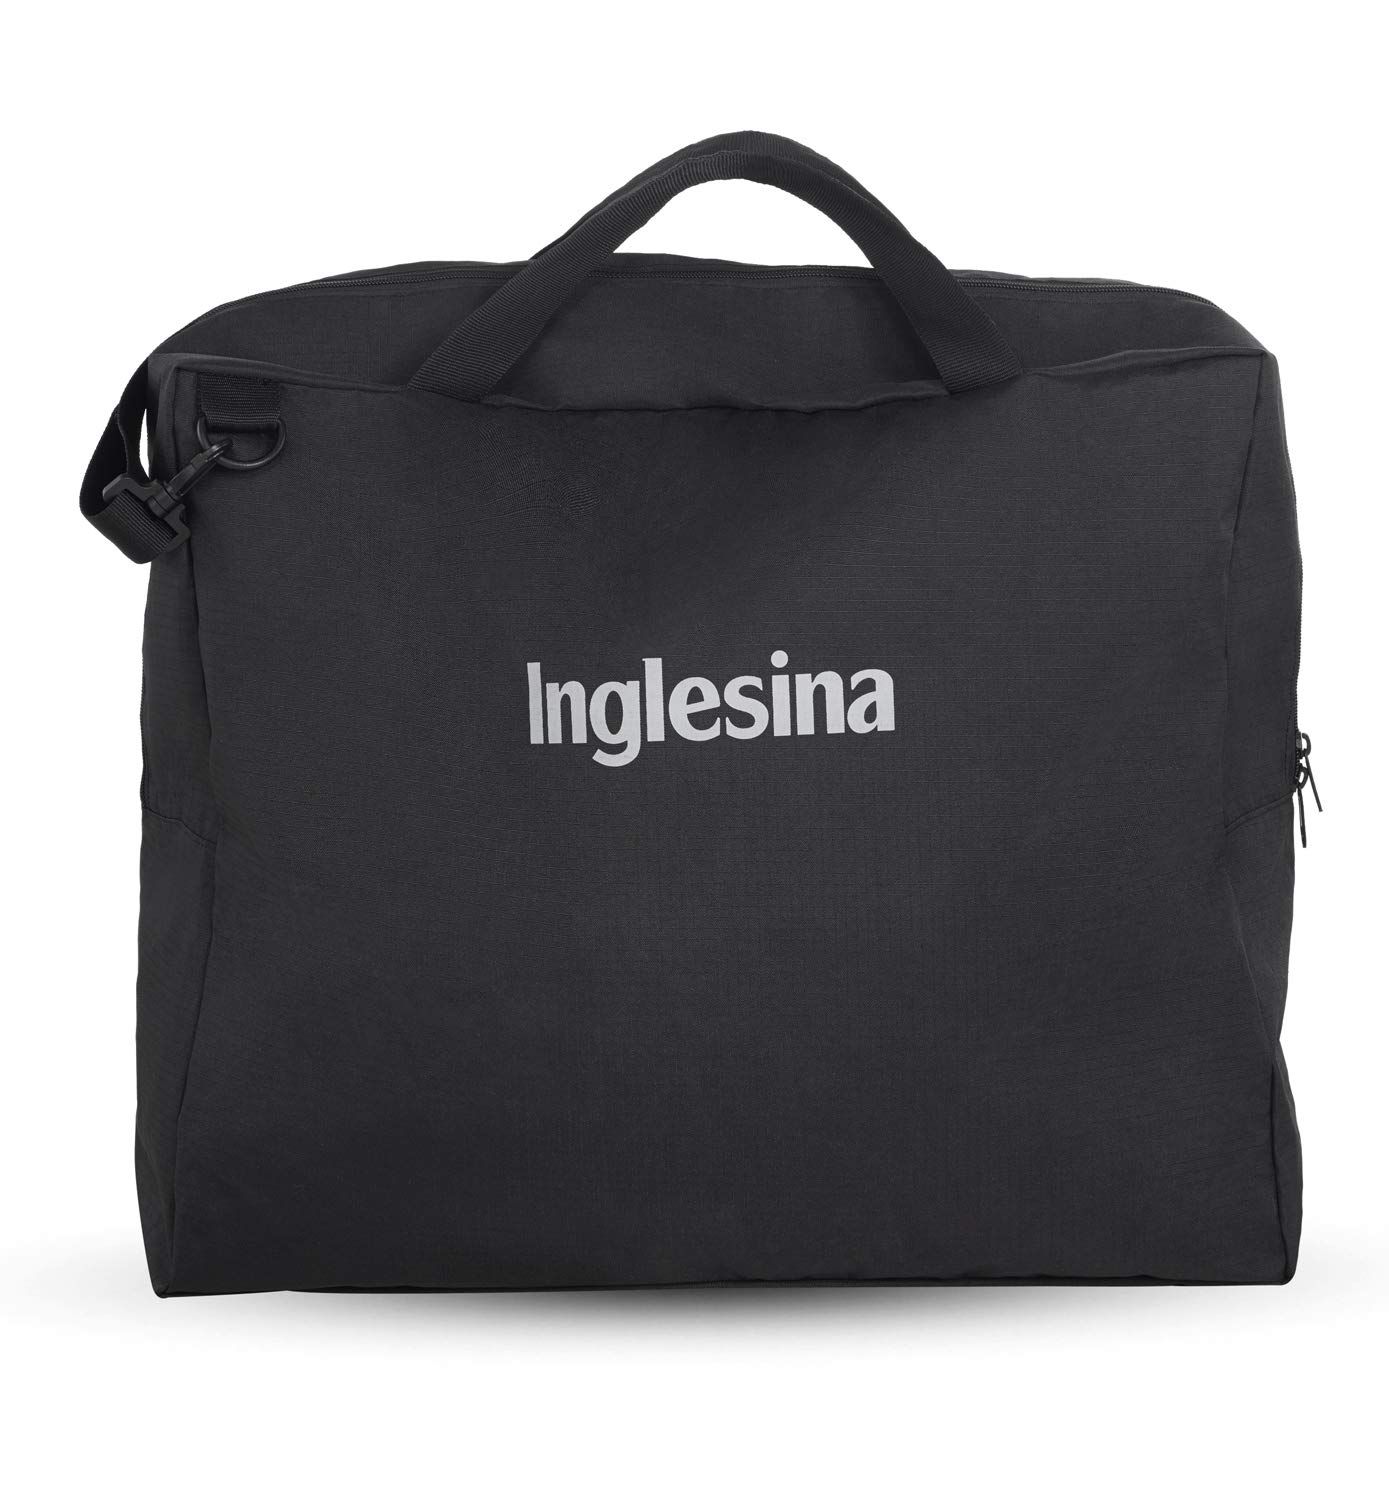 Inglesina Quid Stroller Bag for Airplane Travel, Black | Amazon (US)